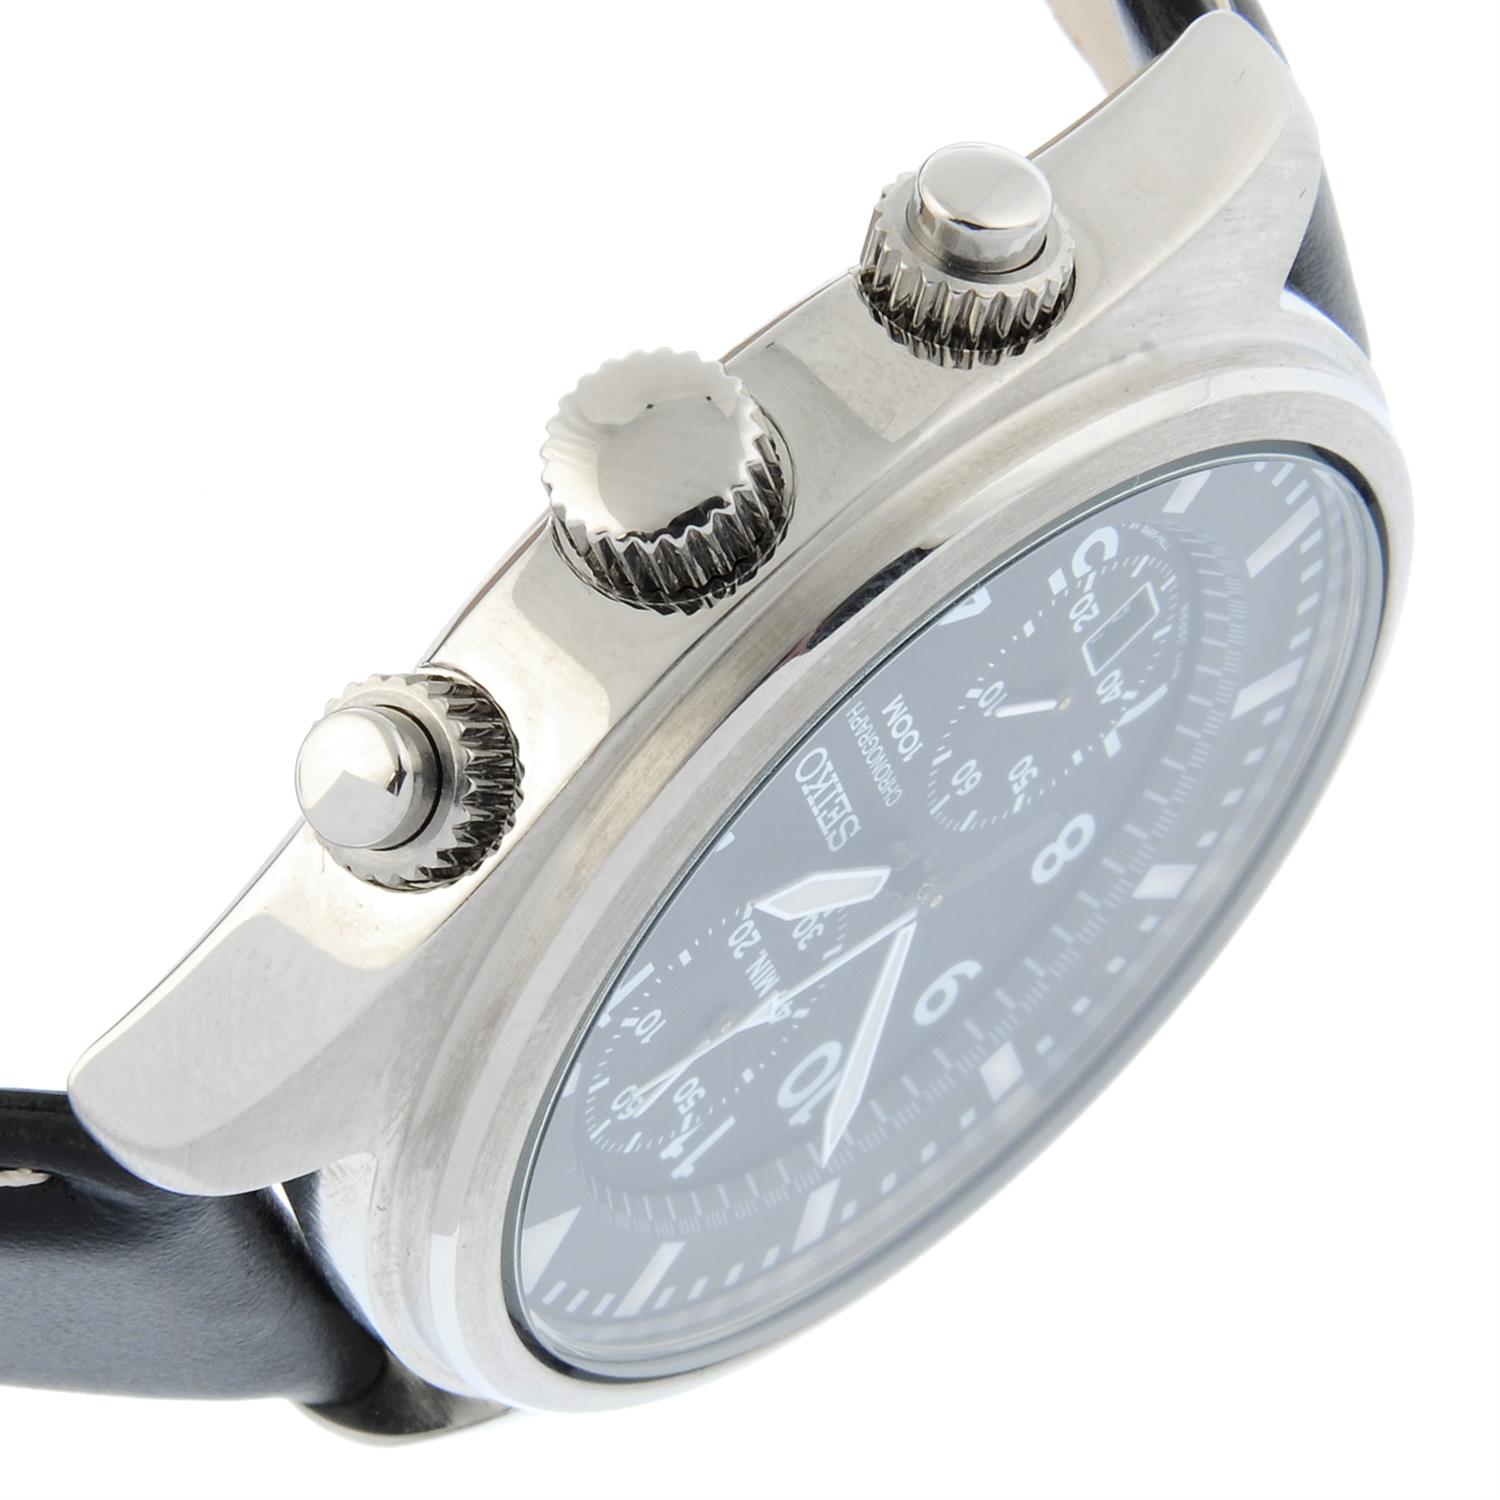 Seiko - a chronograph wrist watch, 42mm. - Image 3 of 4